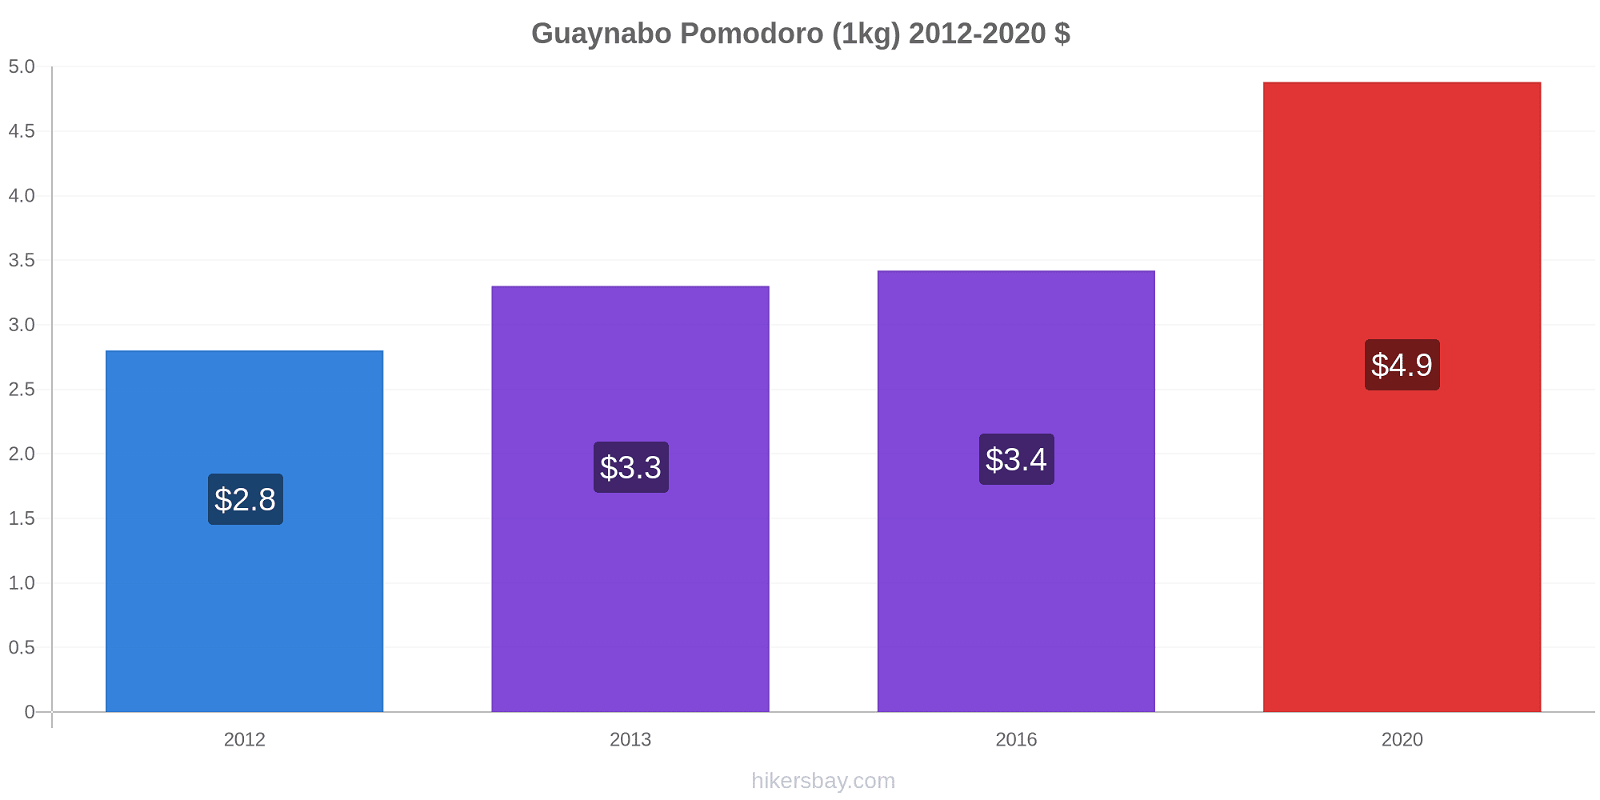 Guaynabo variazioni di prezzo Pomodoro (1kg) hikersbay.com